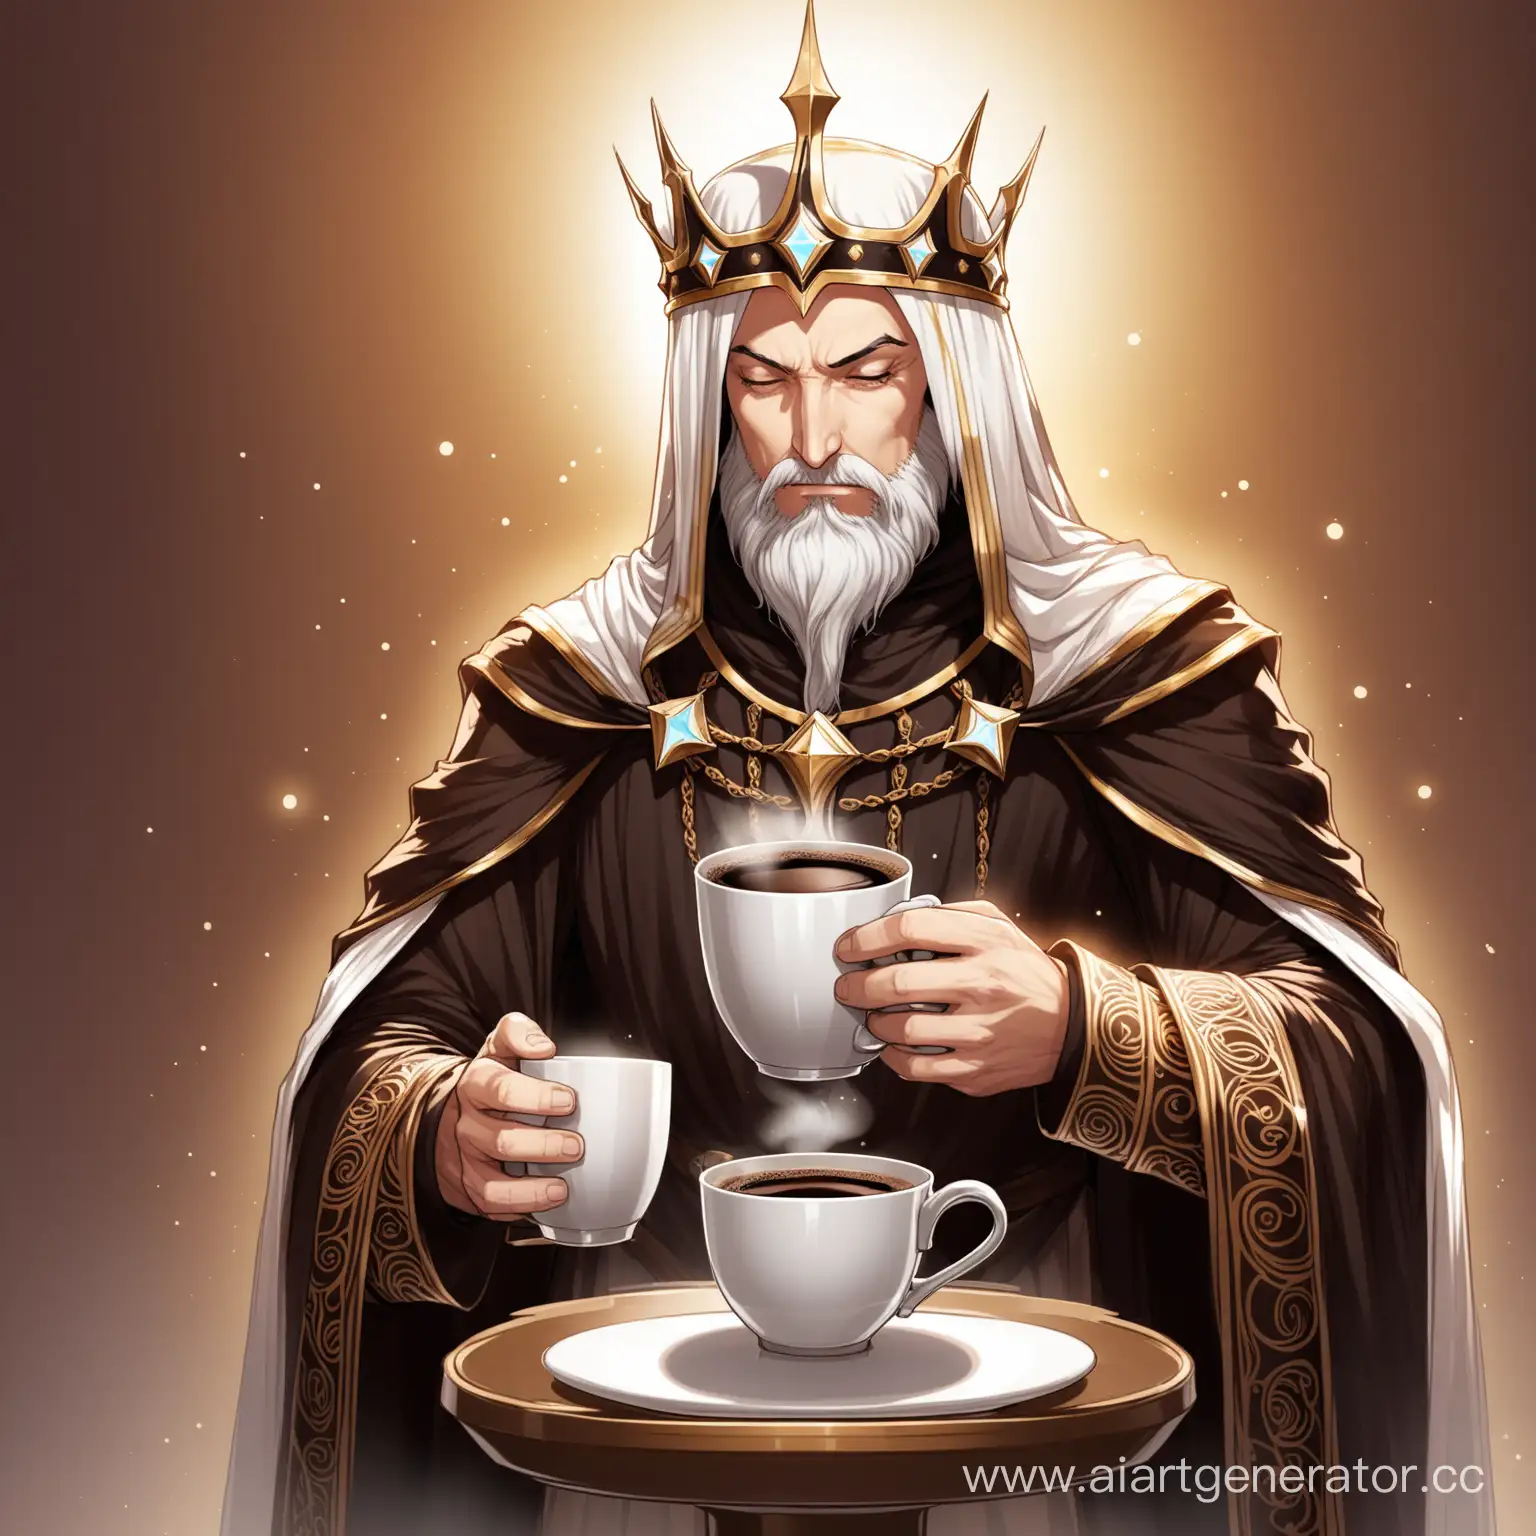 Constantus, lord of coffee, adept of unsleep